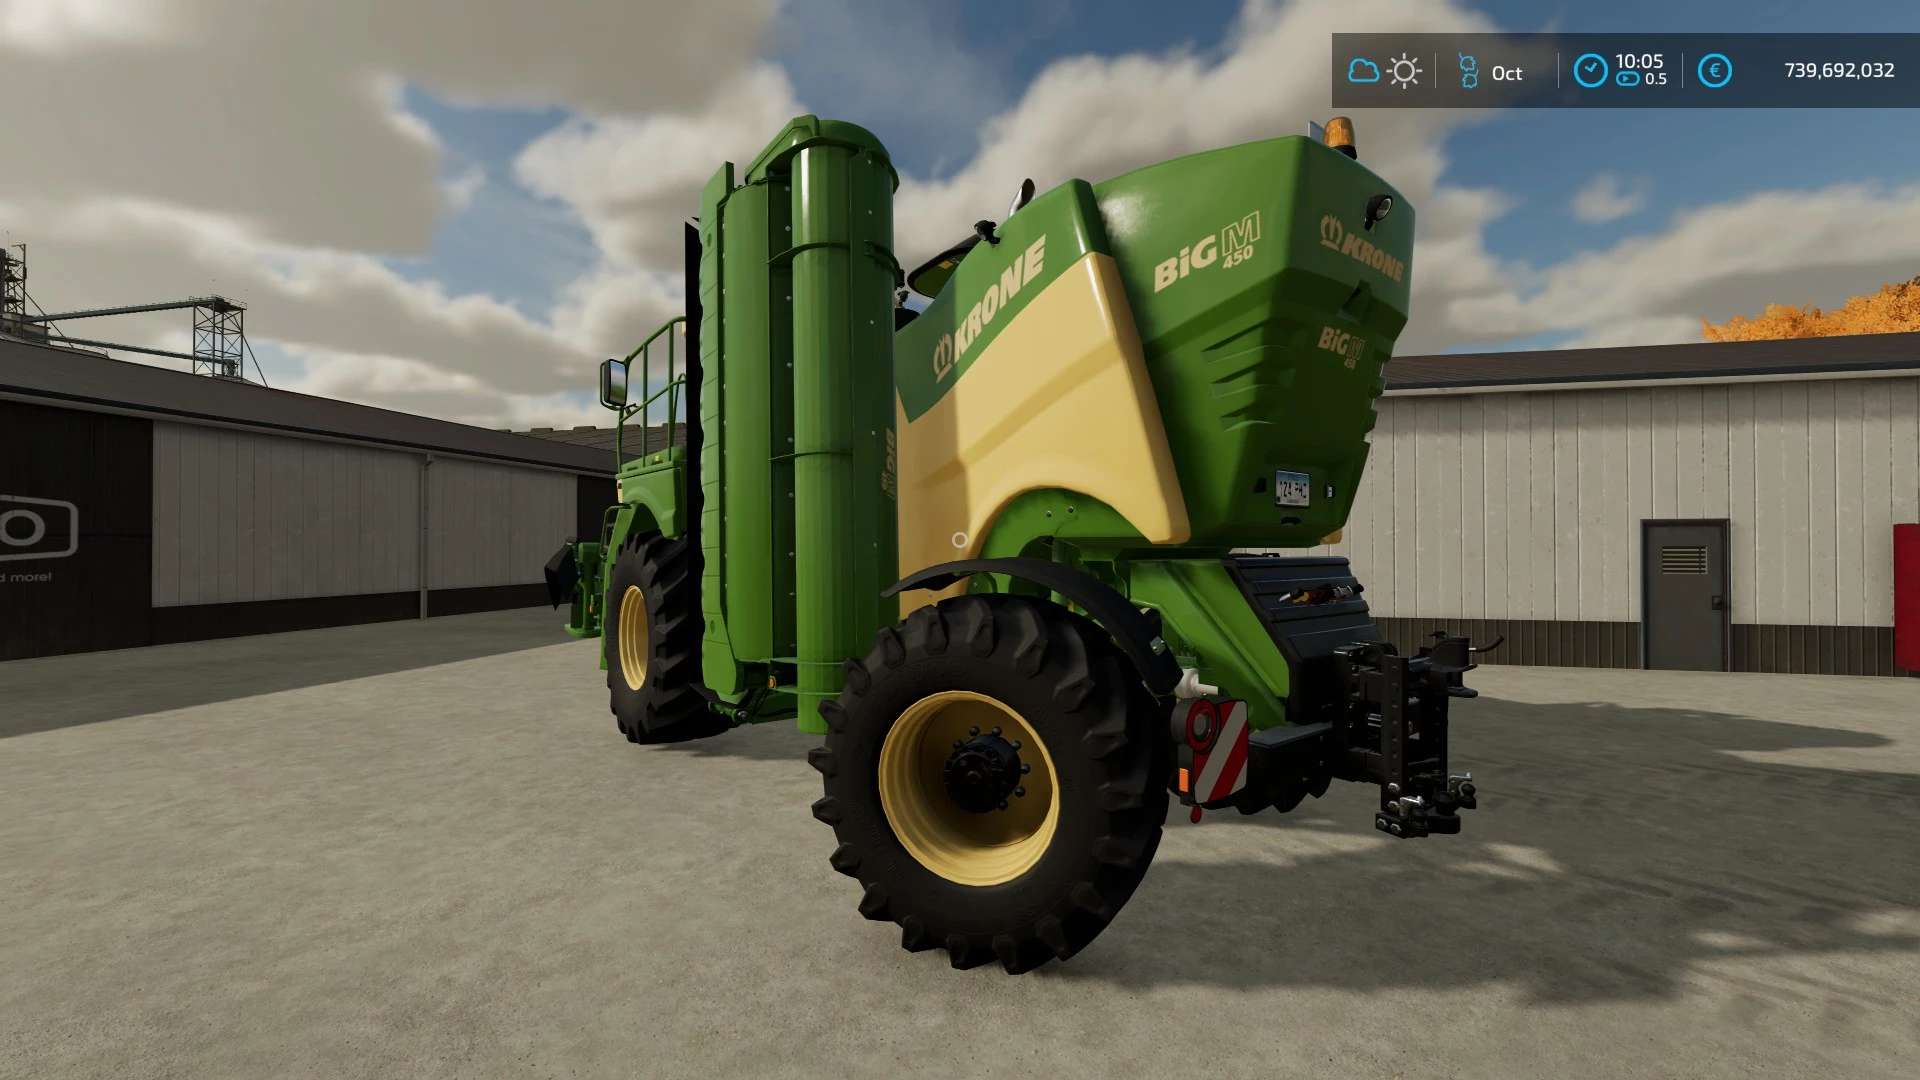 LS22 Big M 450 from Arthur v1.0.0.0 - Farming Simulator 22 mod, LS22 ...